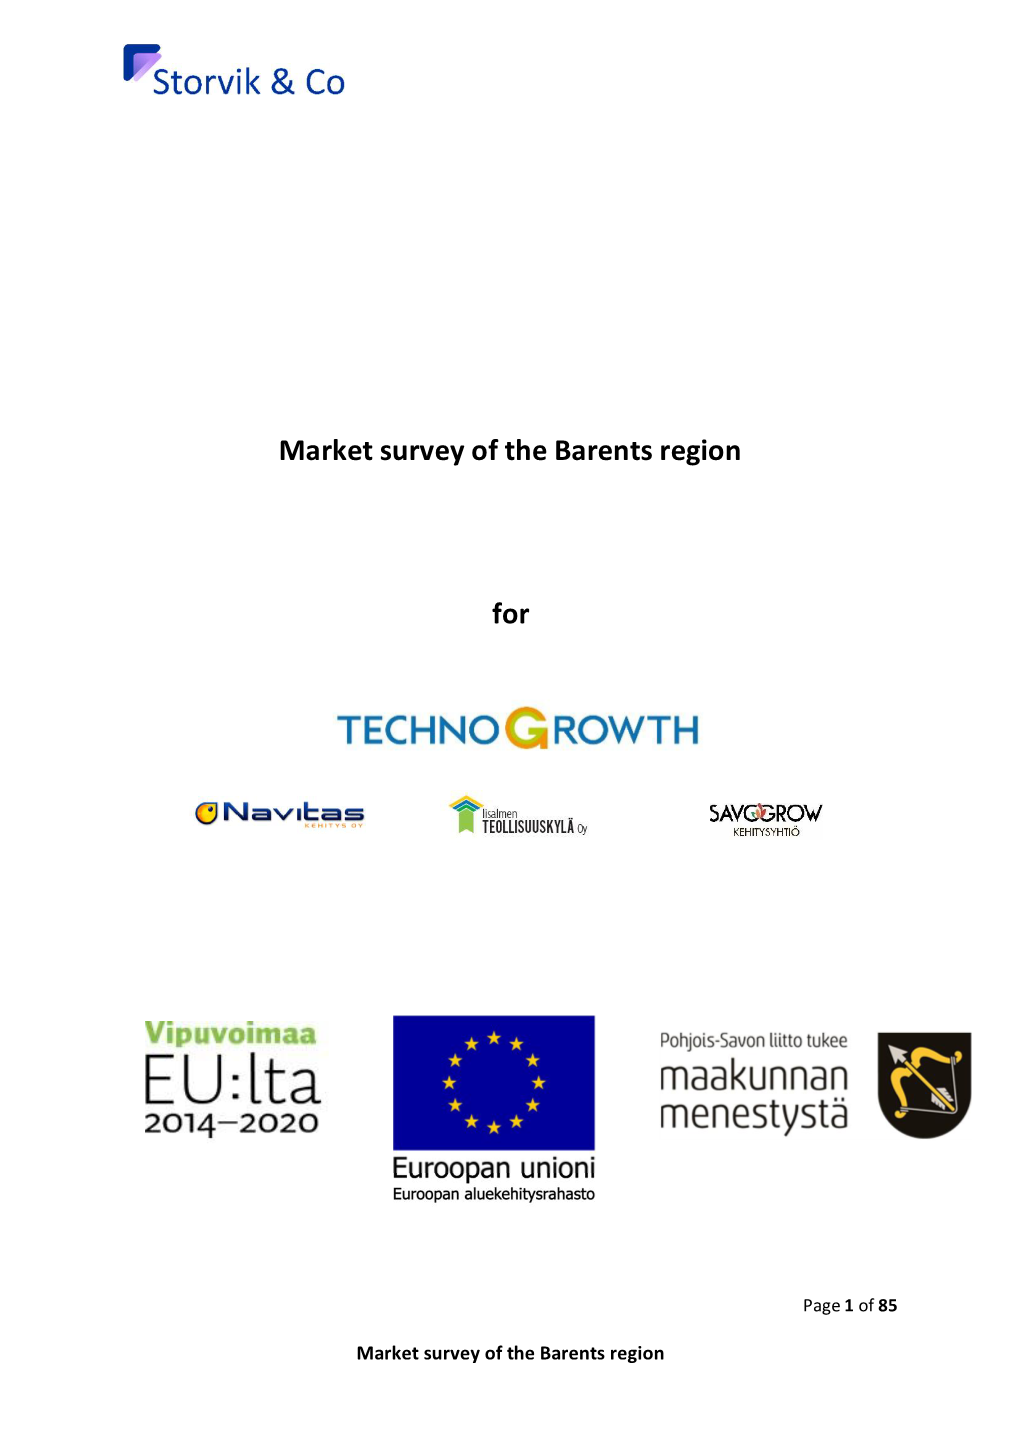 Market Survey of the Barents Region